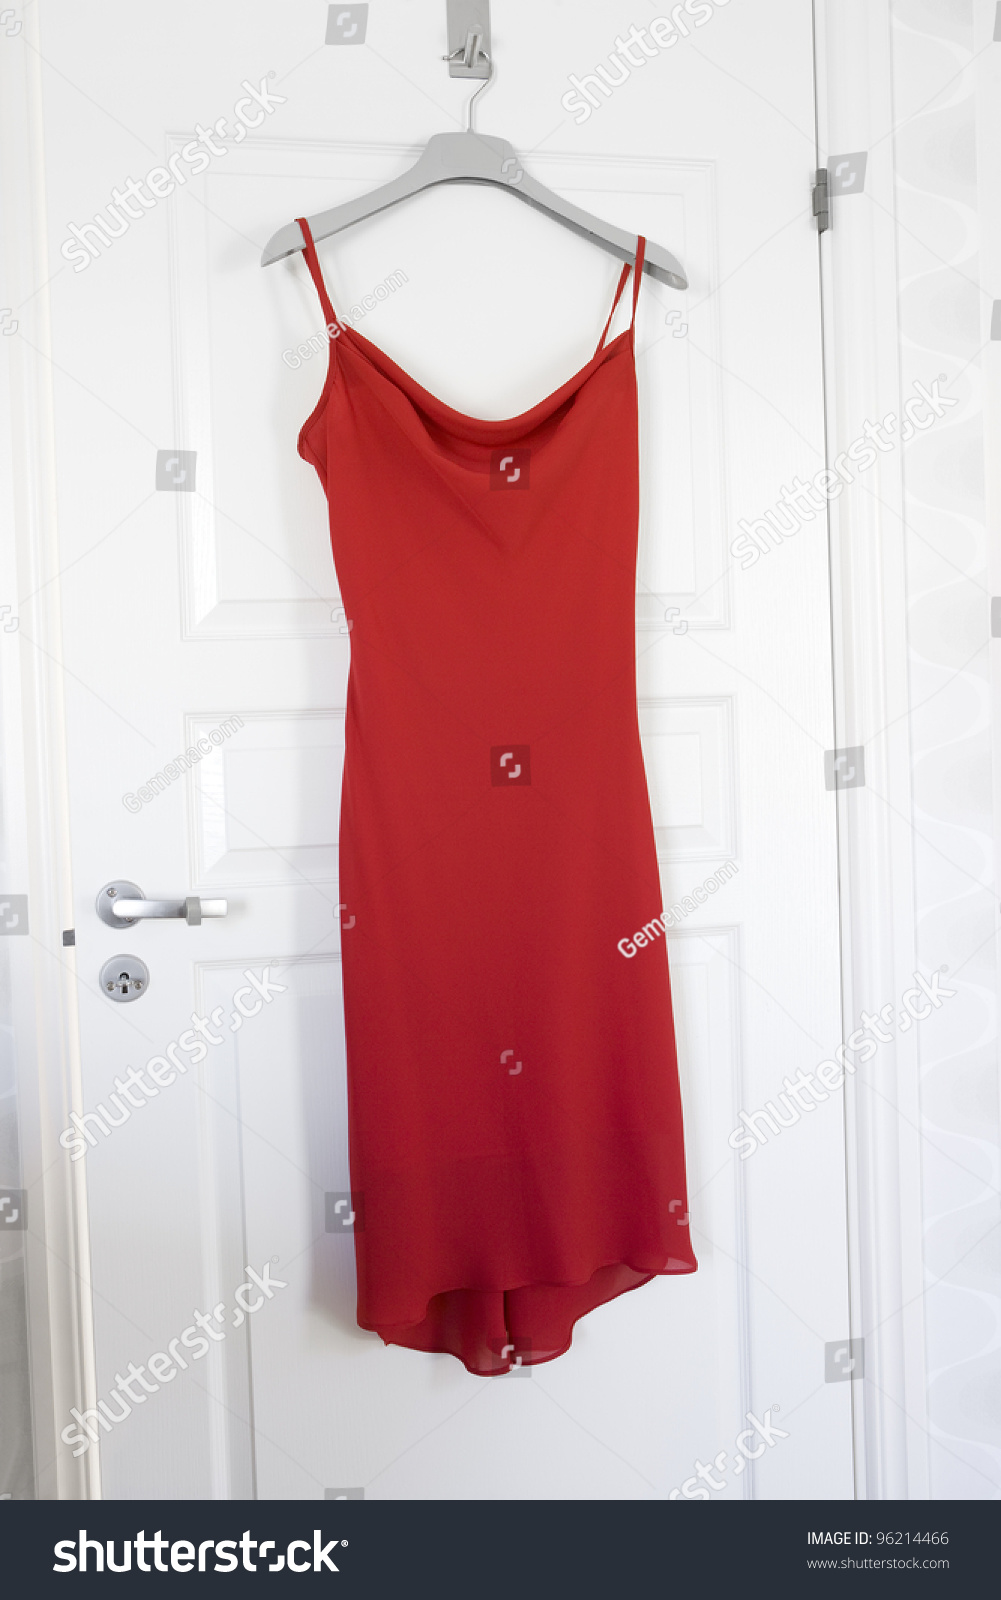 Red Dress Hanging On A Door Stock Photo 96214466 : Shutterstock